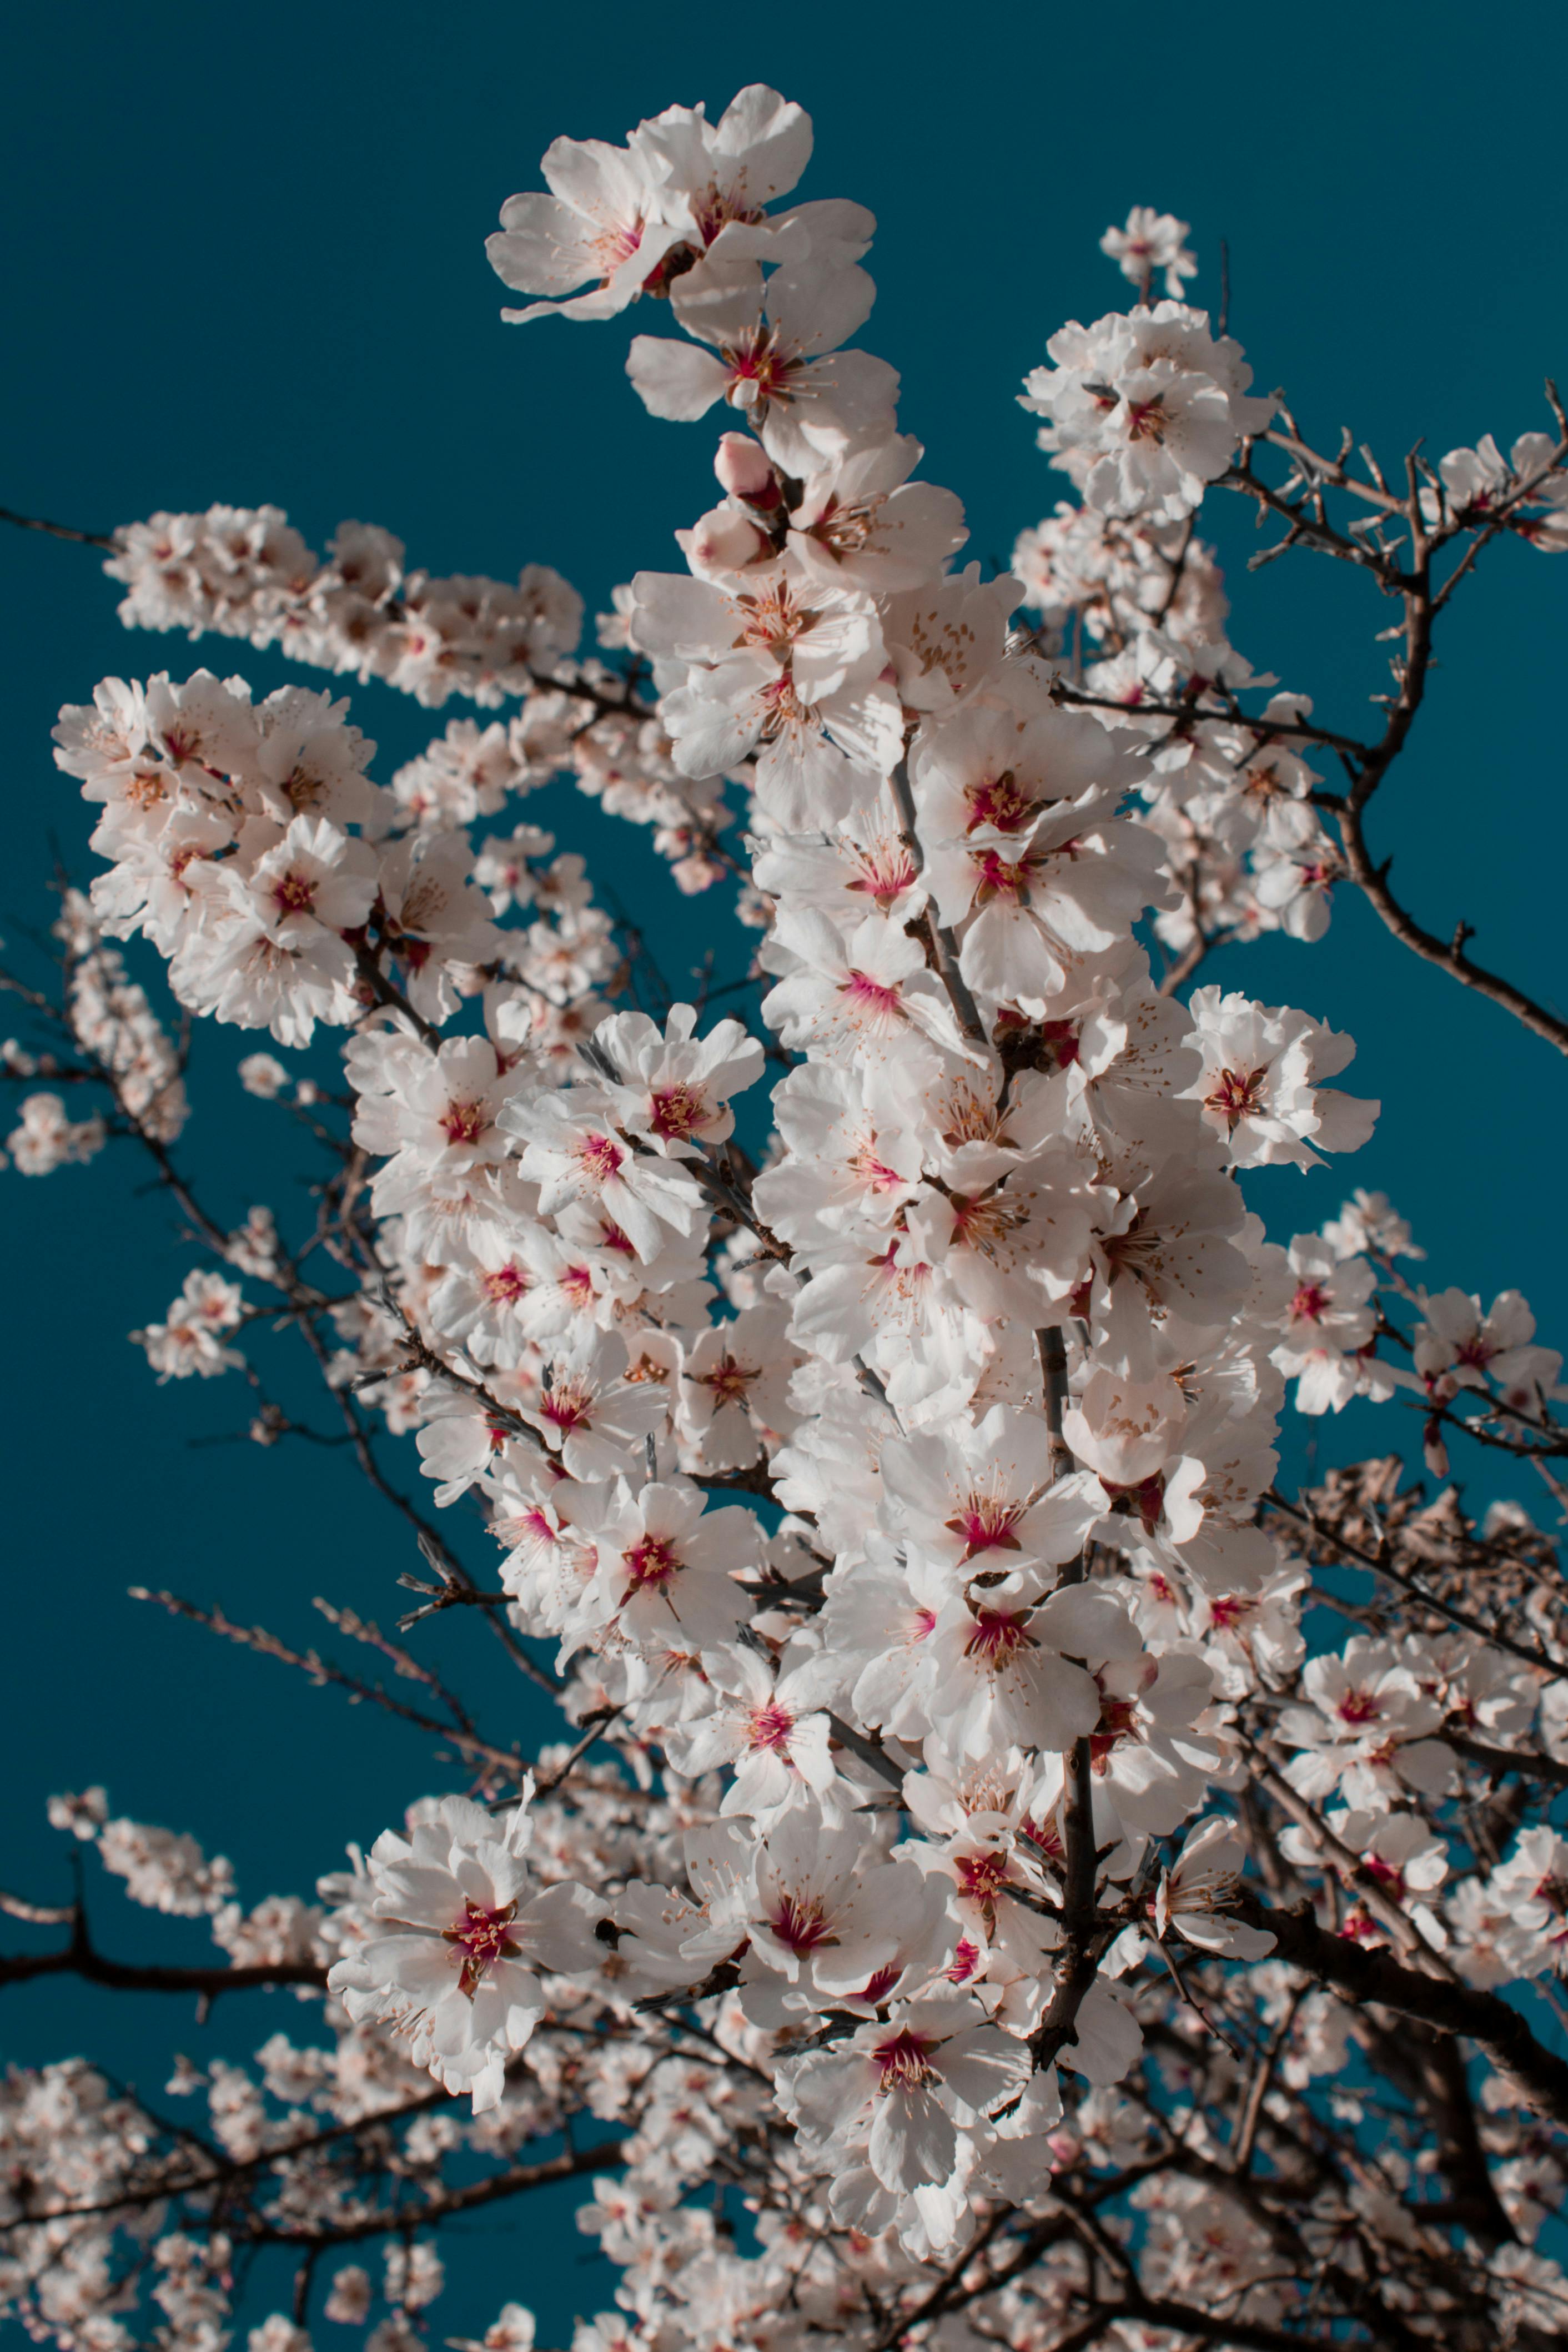 White Flowering Tree Low-angle Photo at Daytime · Free Stock Photo